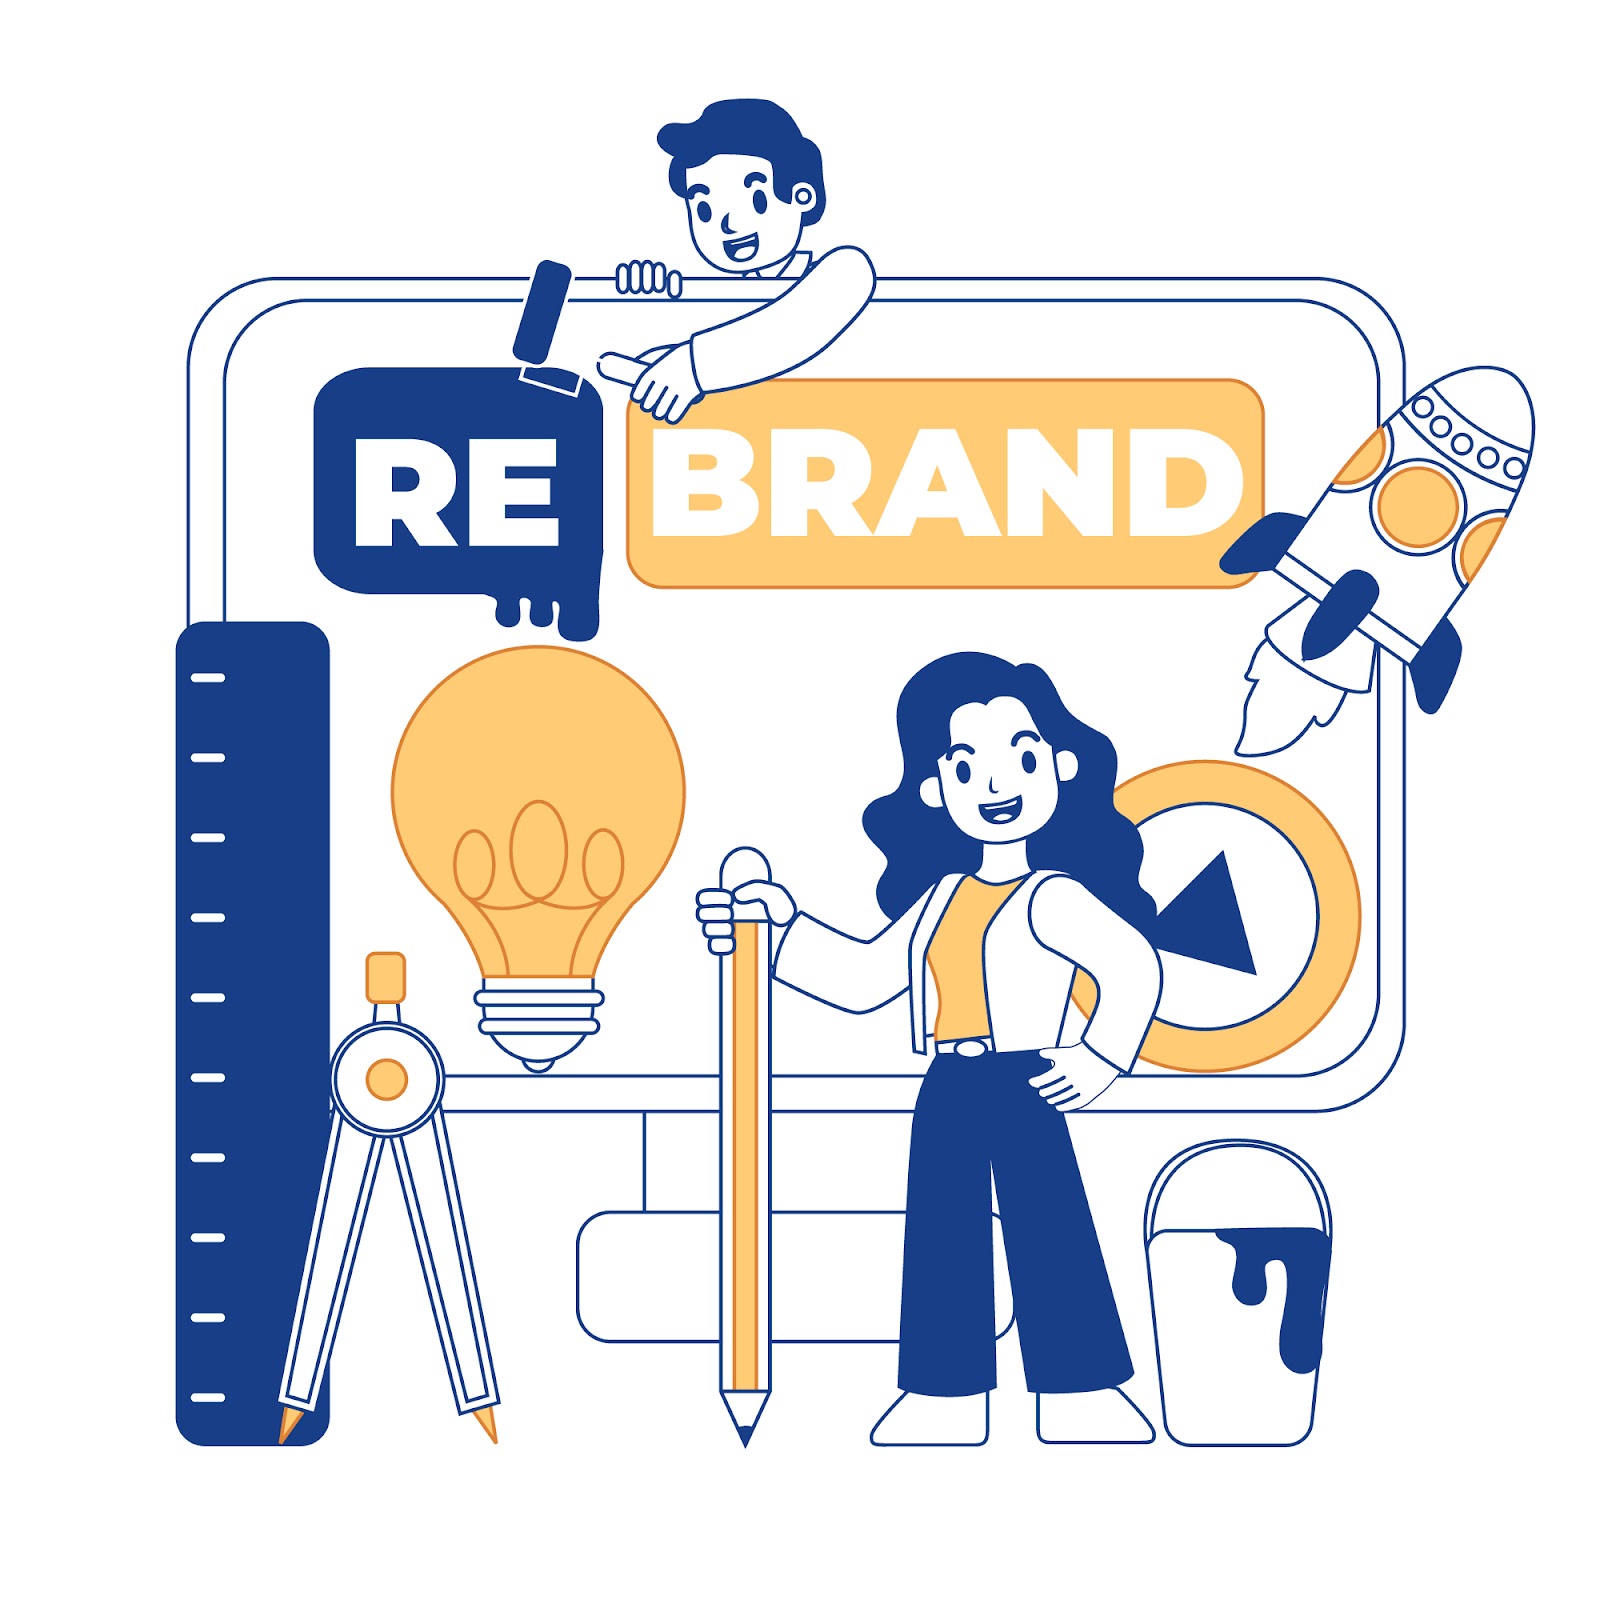 A design about rebranding